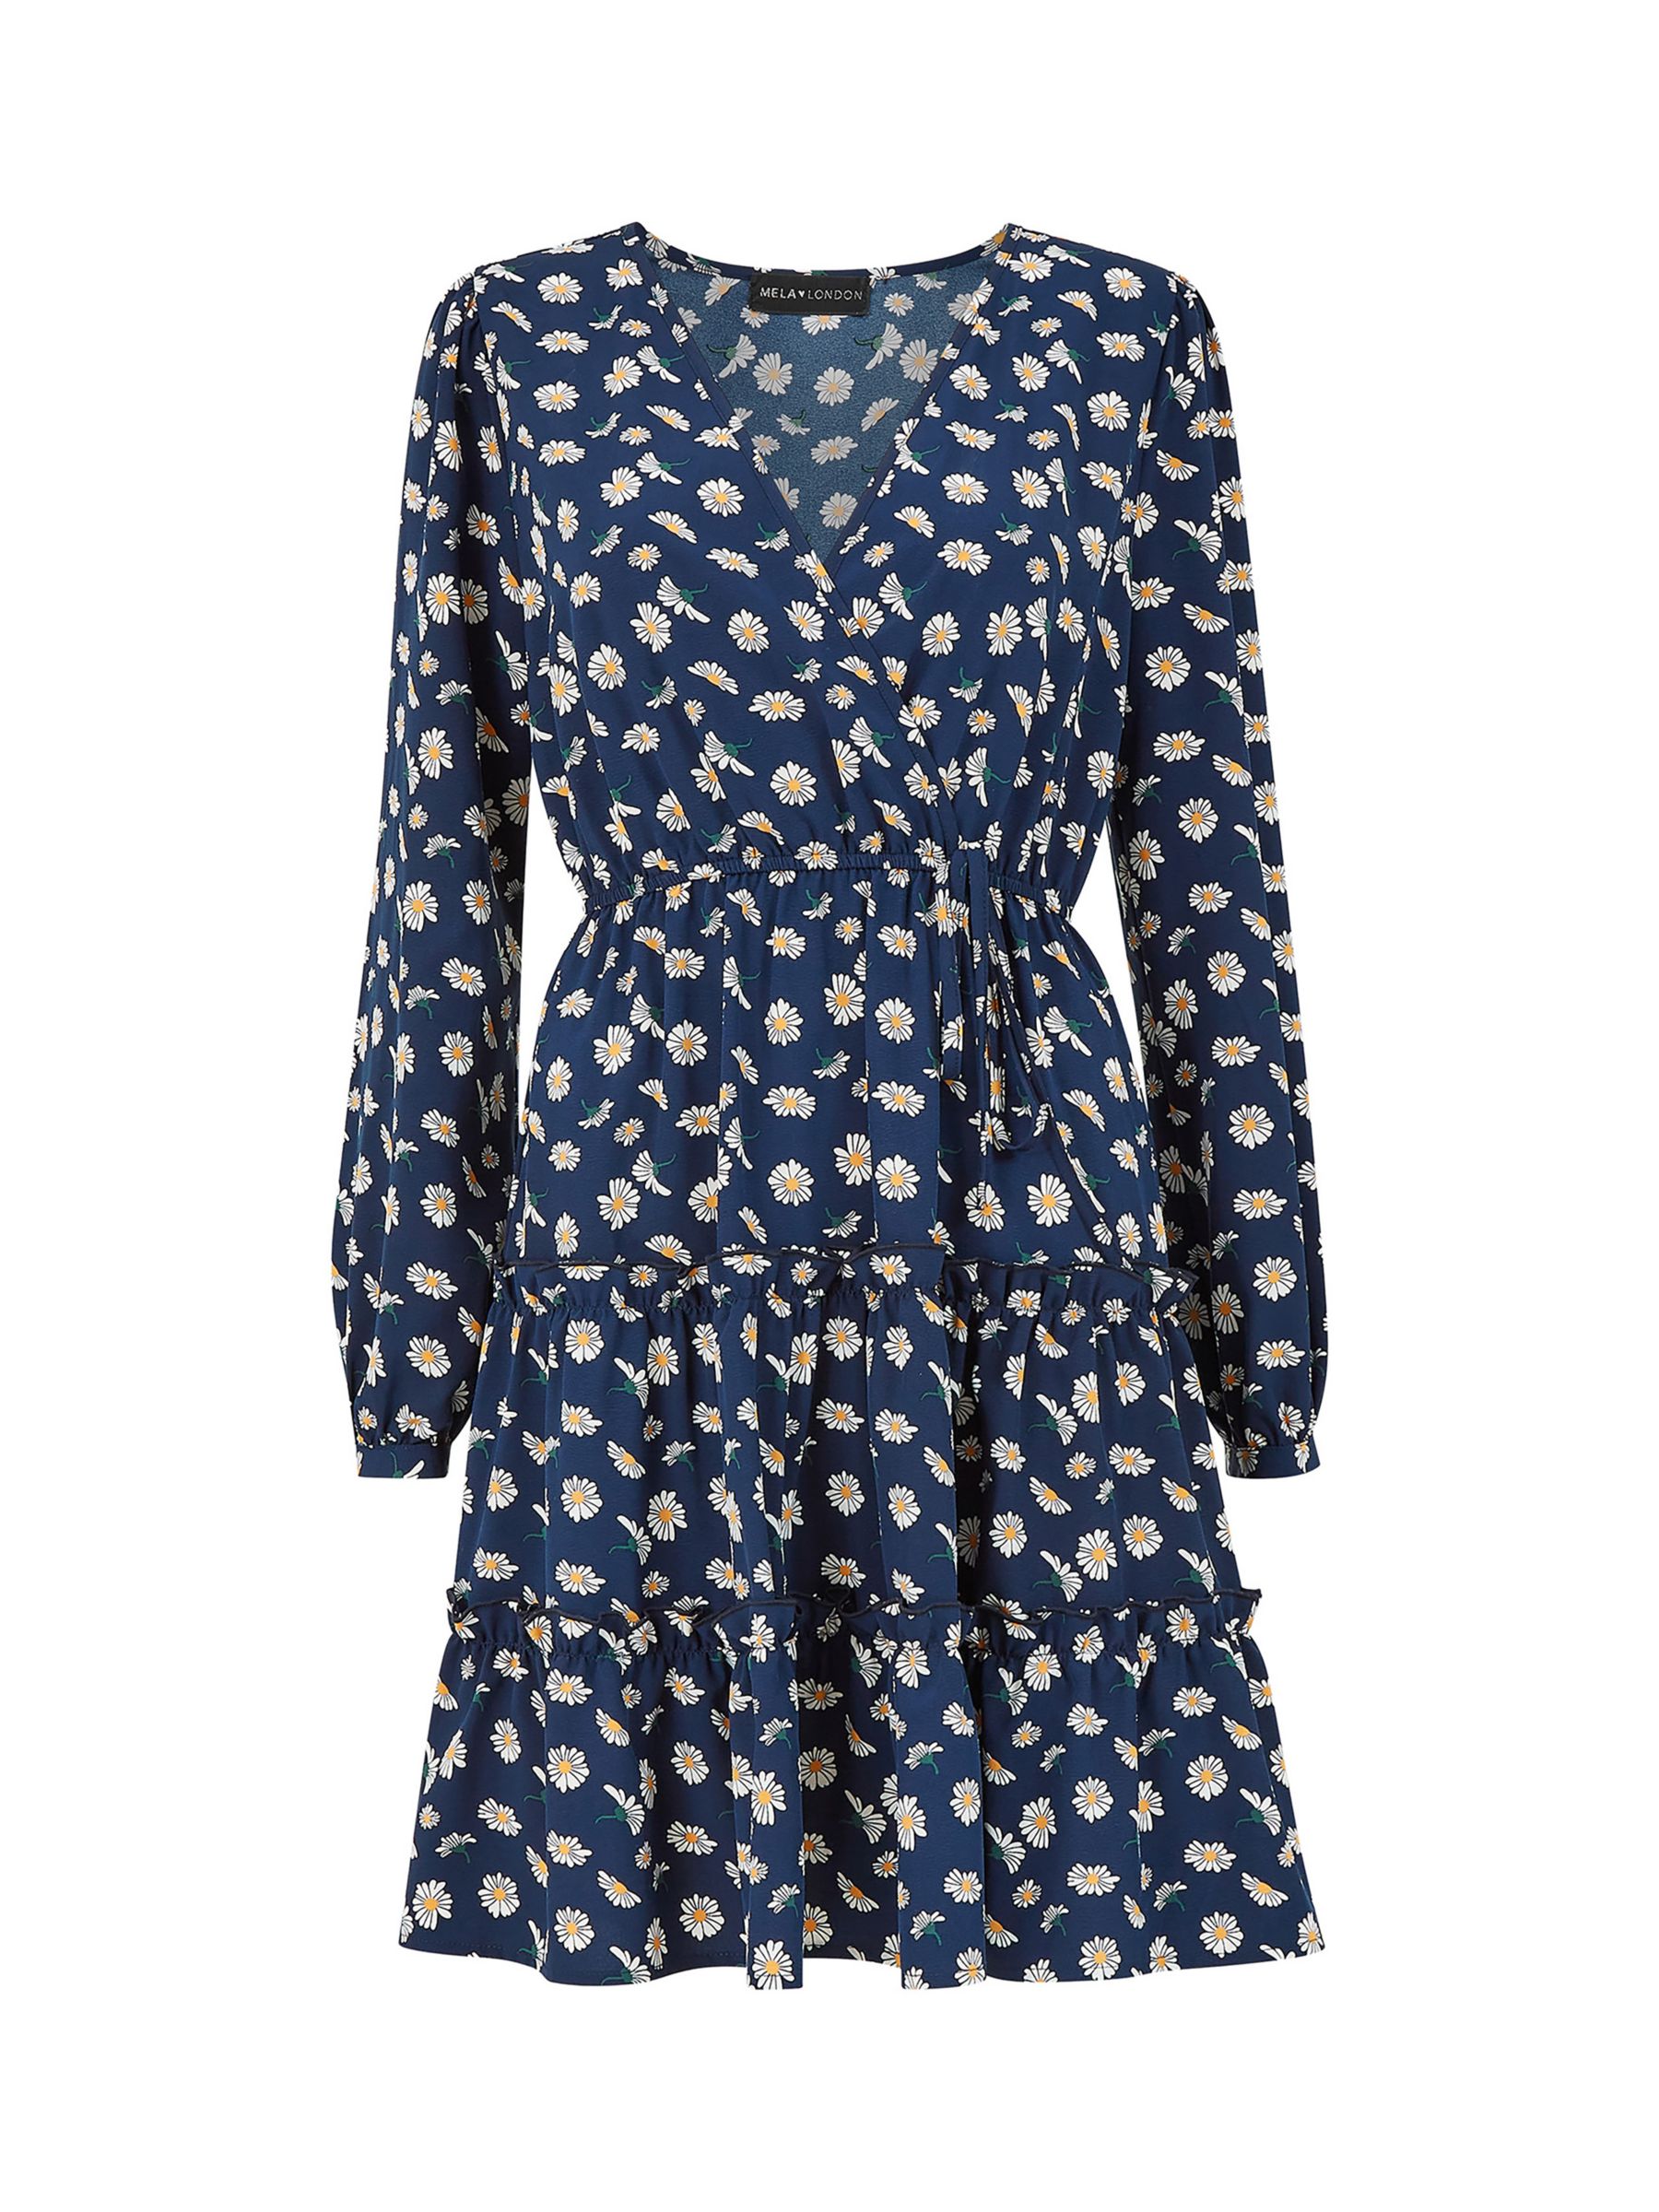 Mela London Daisy Print Tiered Wrap Knee Length Dress, Navy/Multi at ...